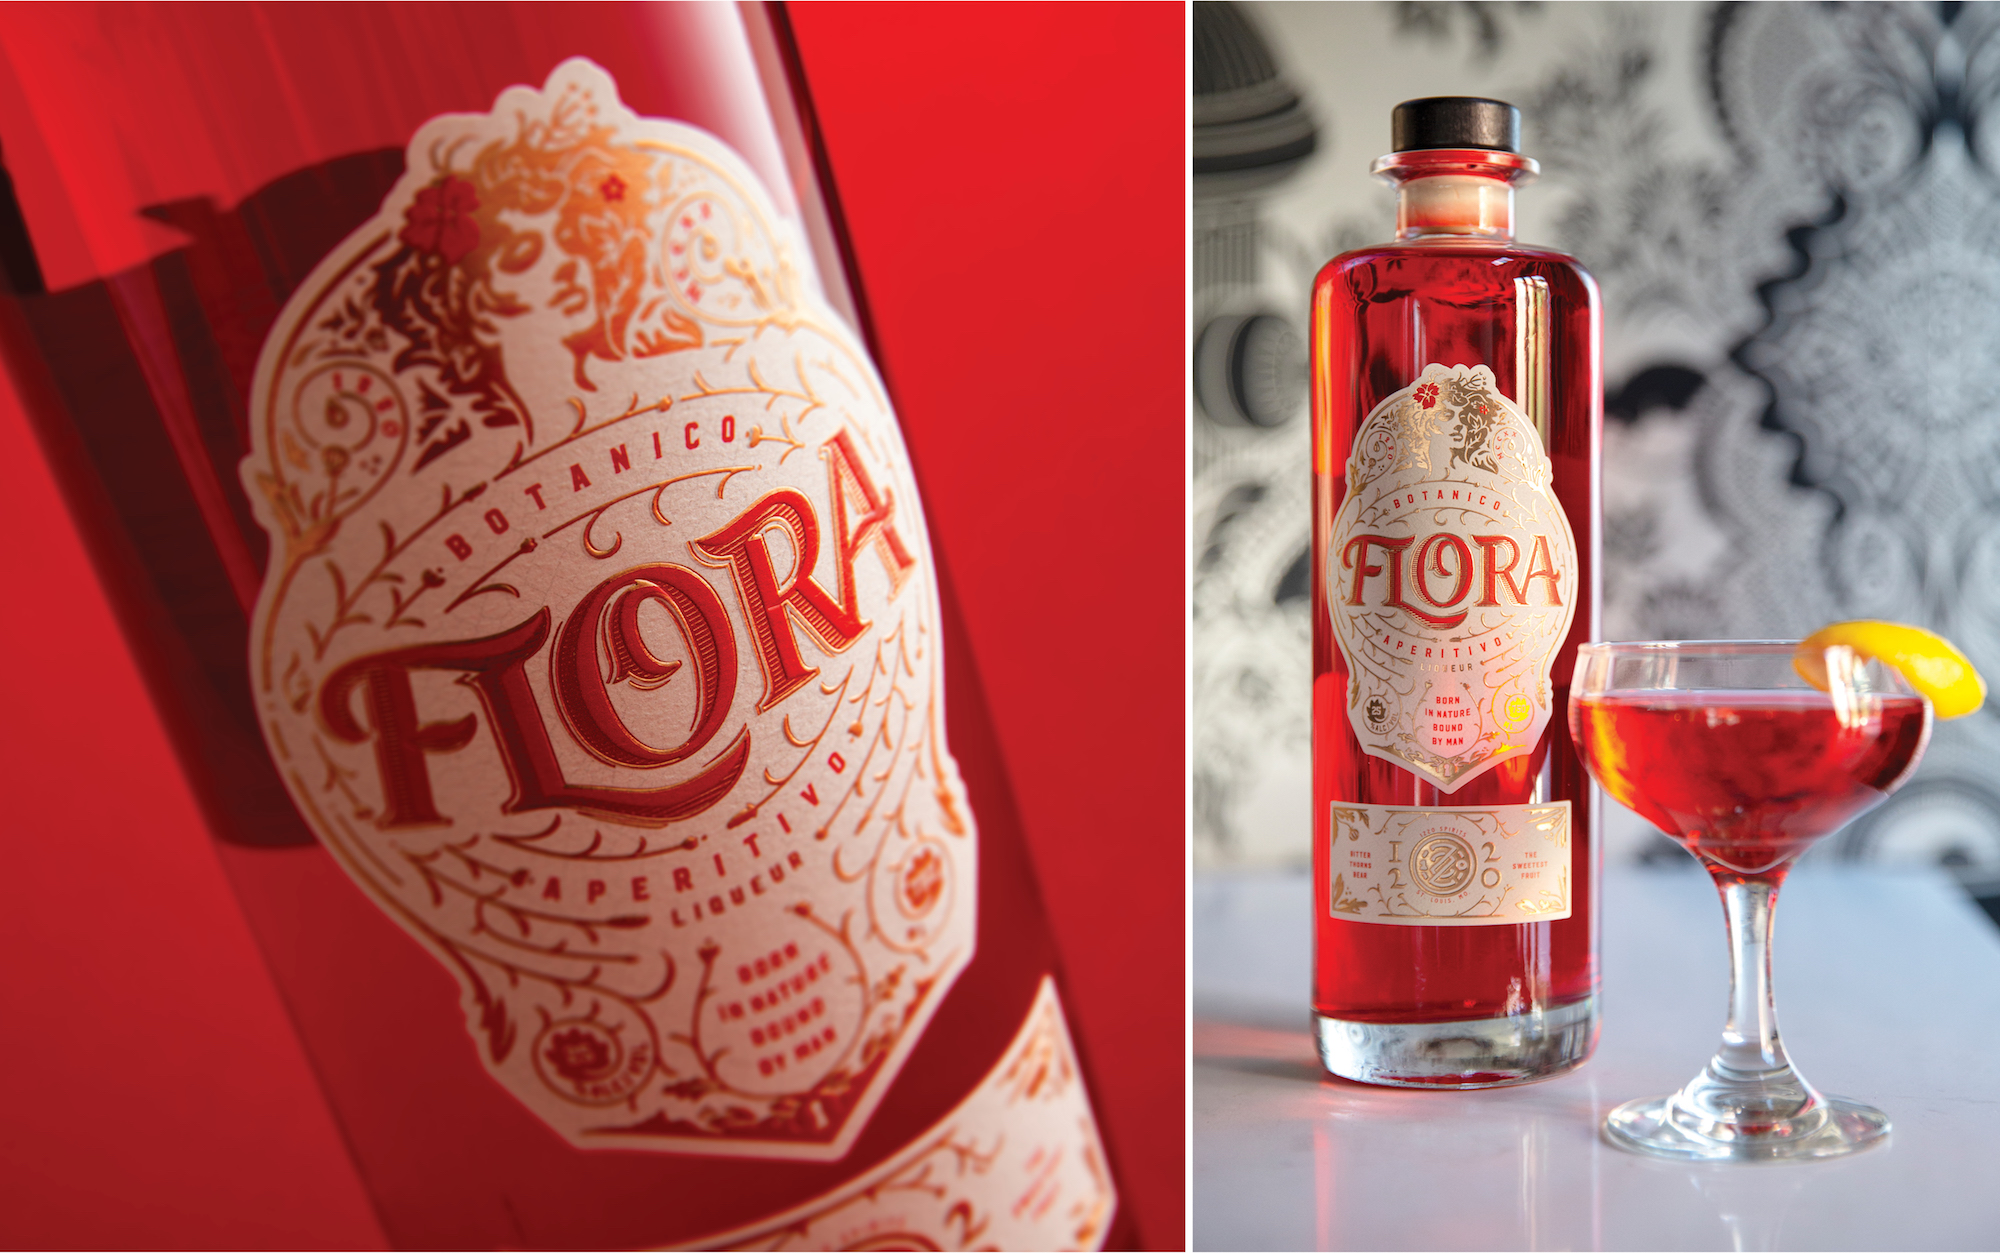 Photos of Flora bottle design